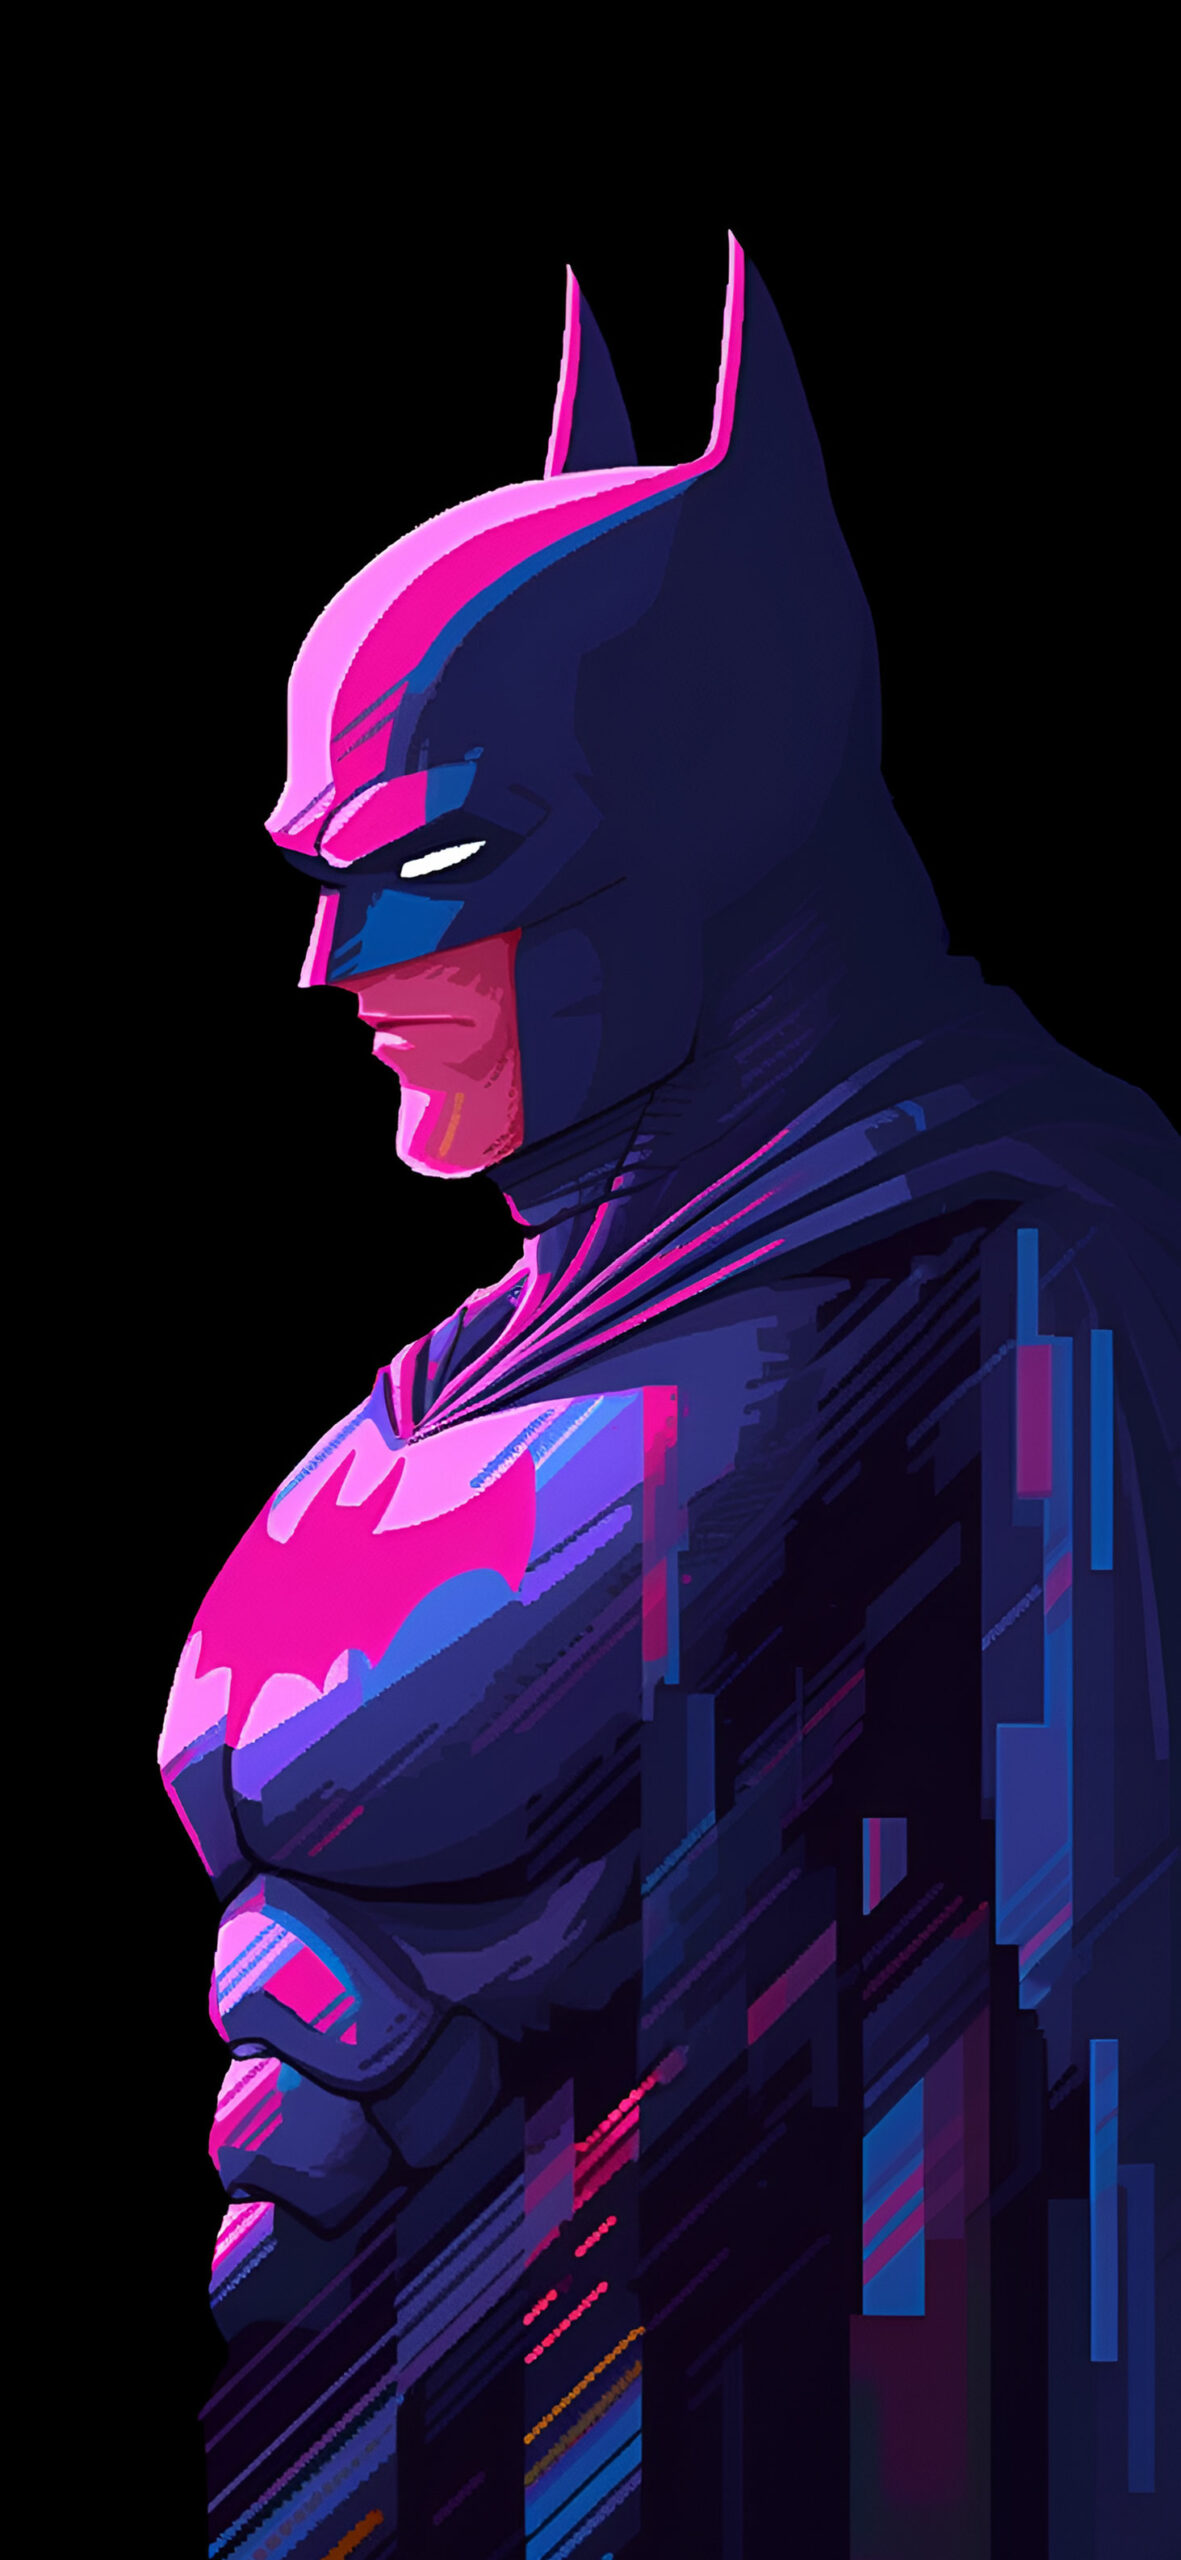 DC batman glitch wallpaper Cool superhero dark wallpaper for i